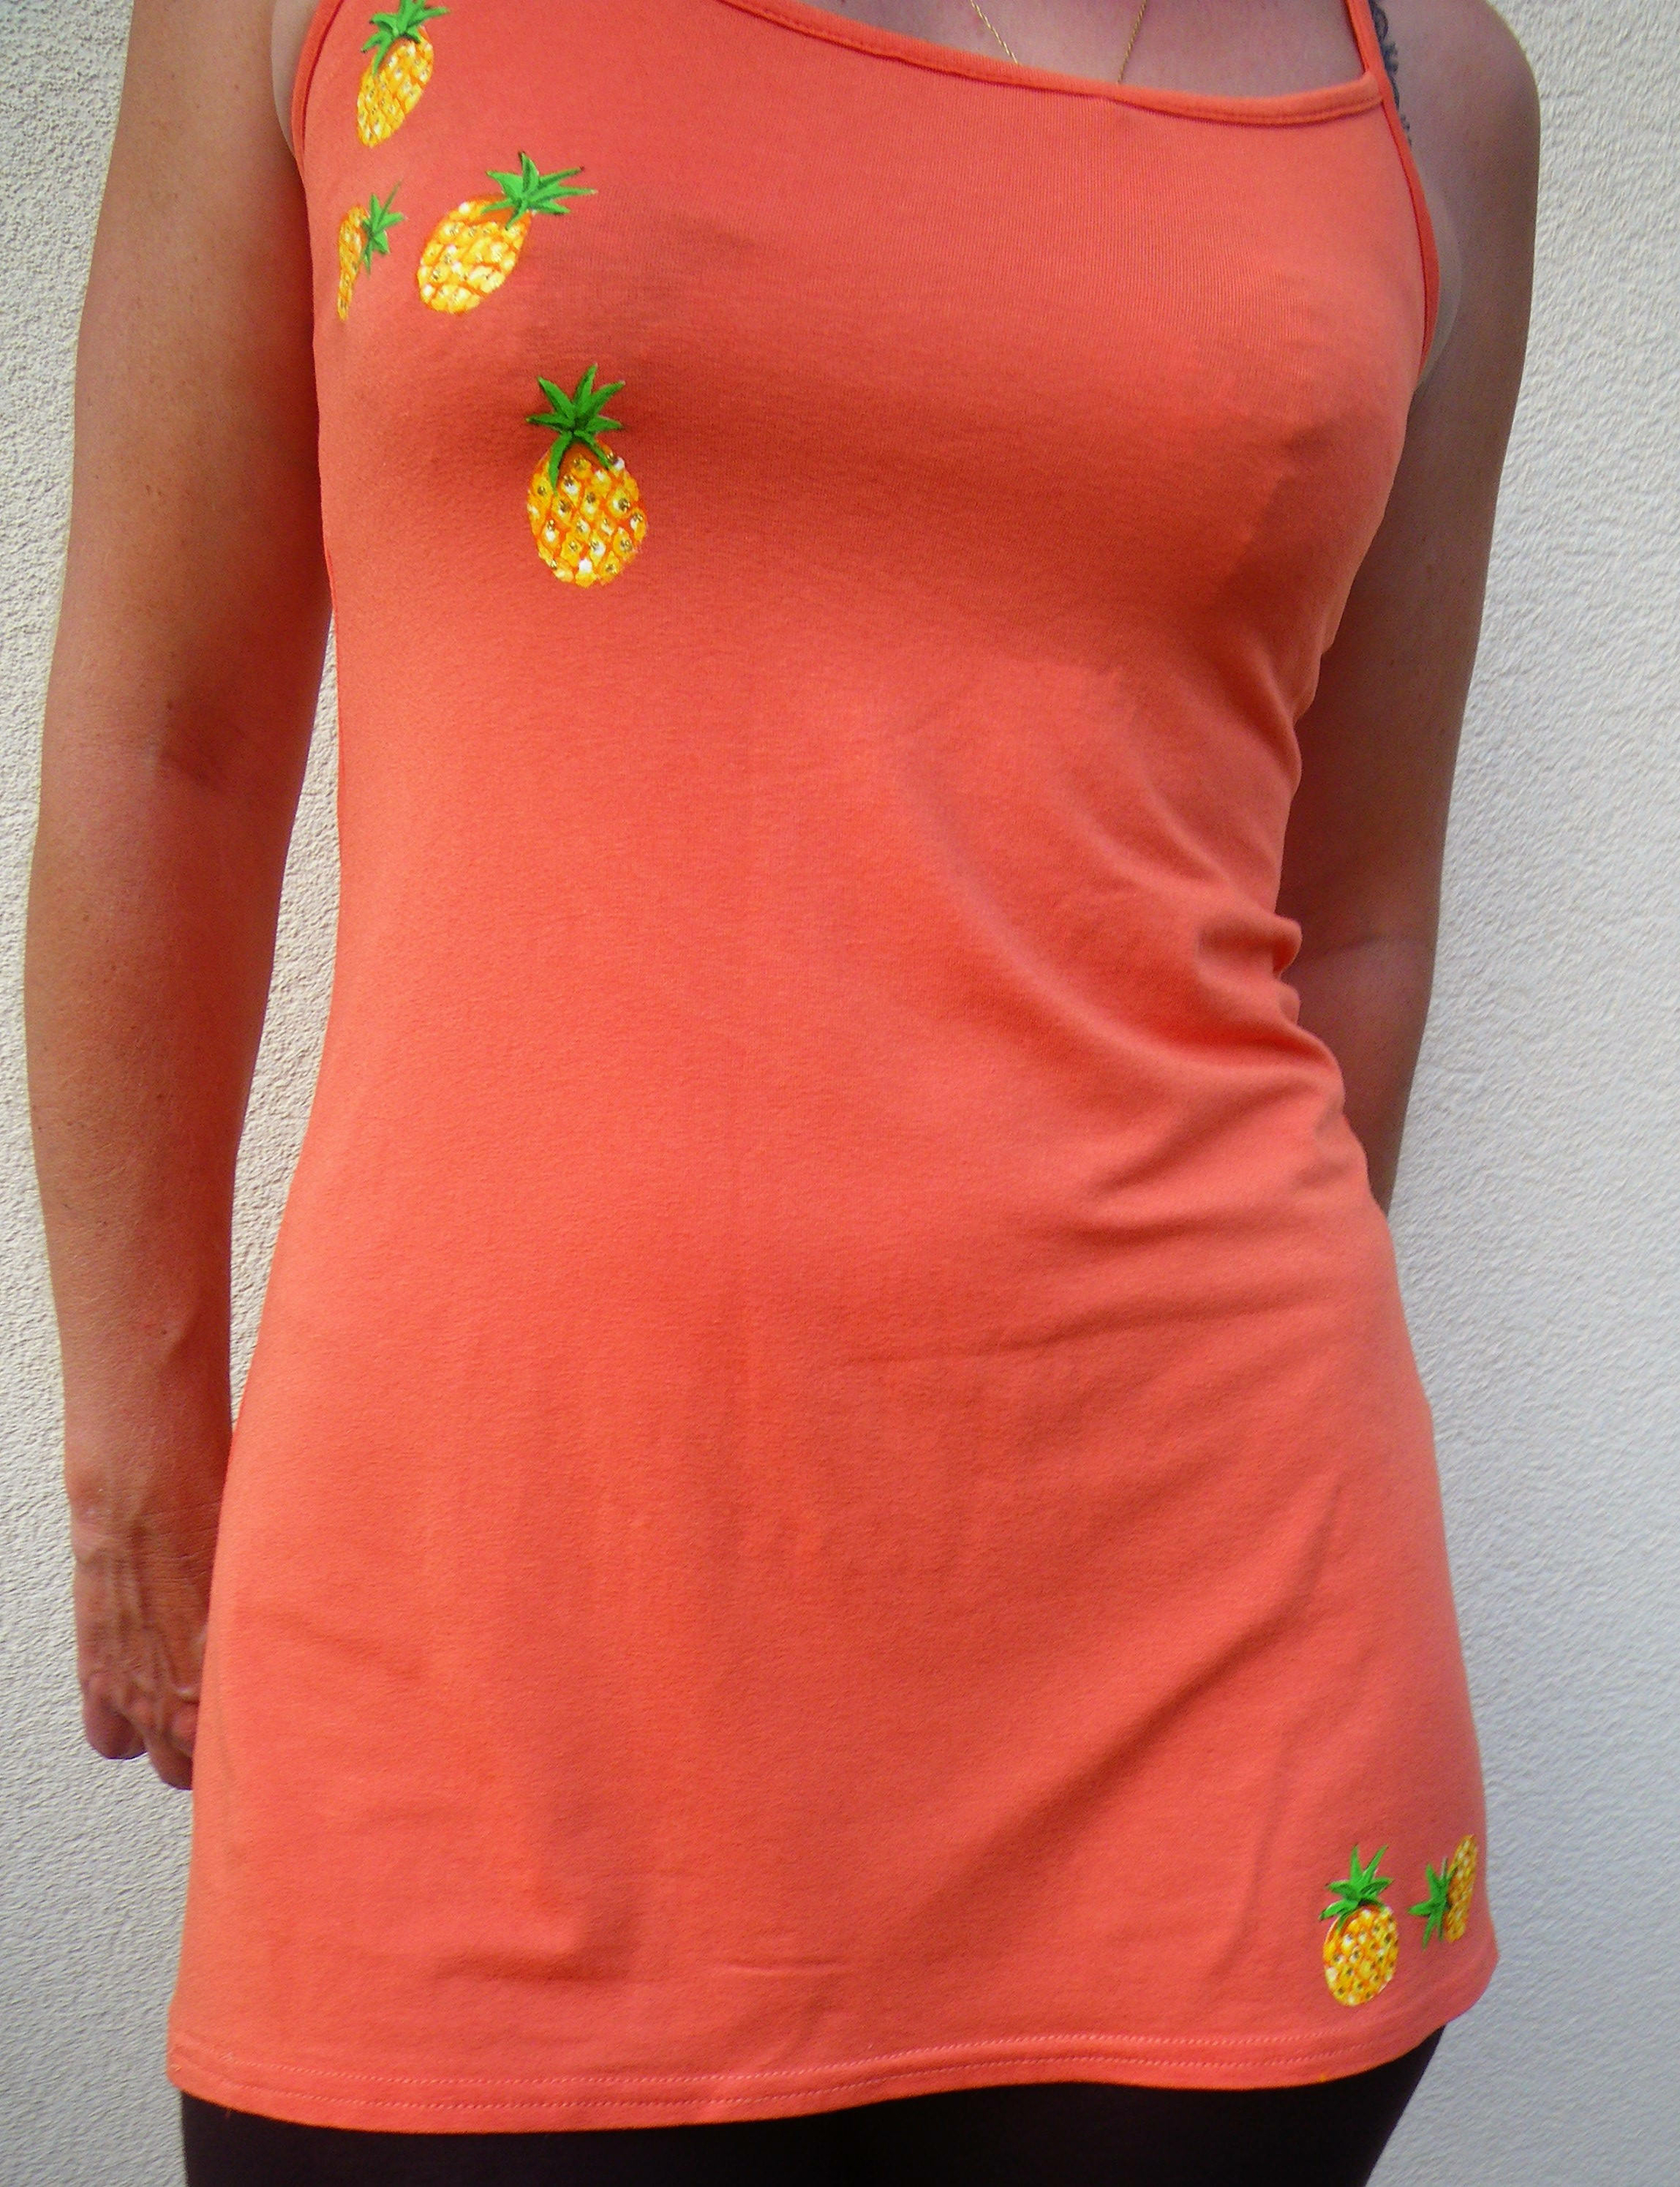 robe nuisette orange avec ananas